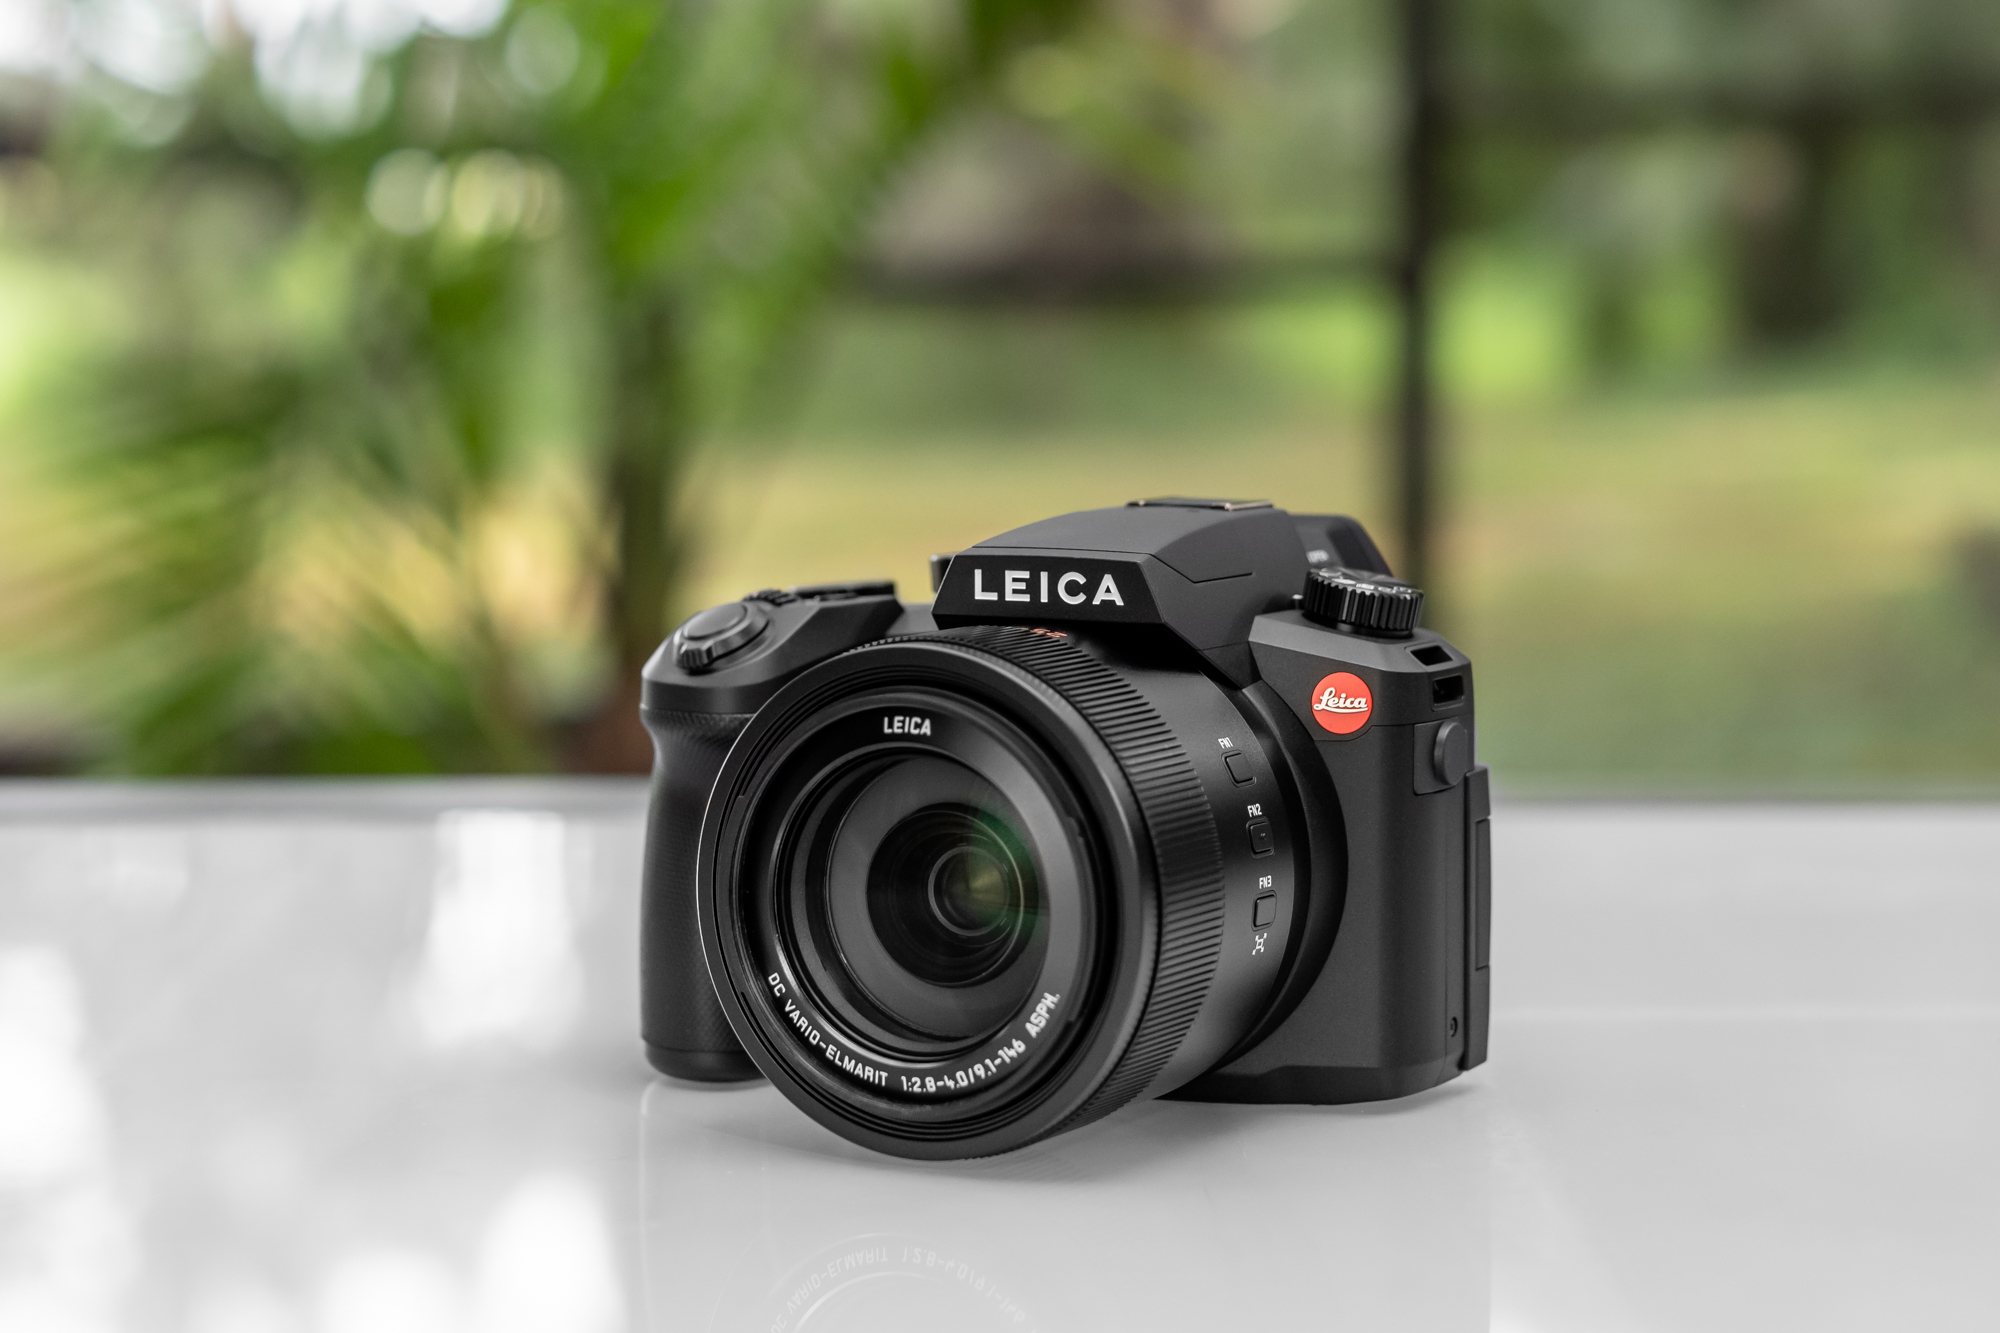 Leica D-Lux 4 vs. Leica D-Lux 5 comparison (part 1) - Leica Rumors